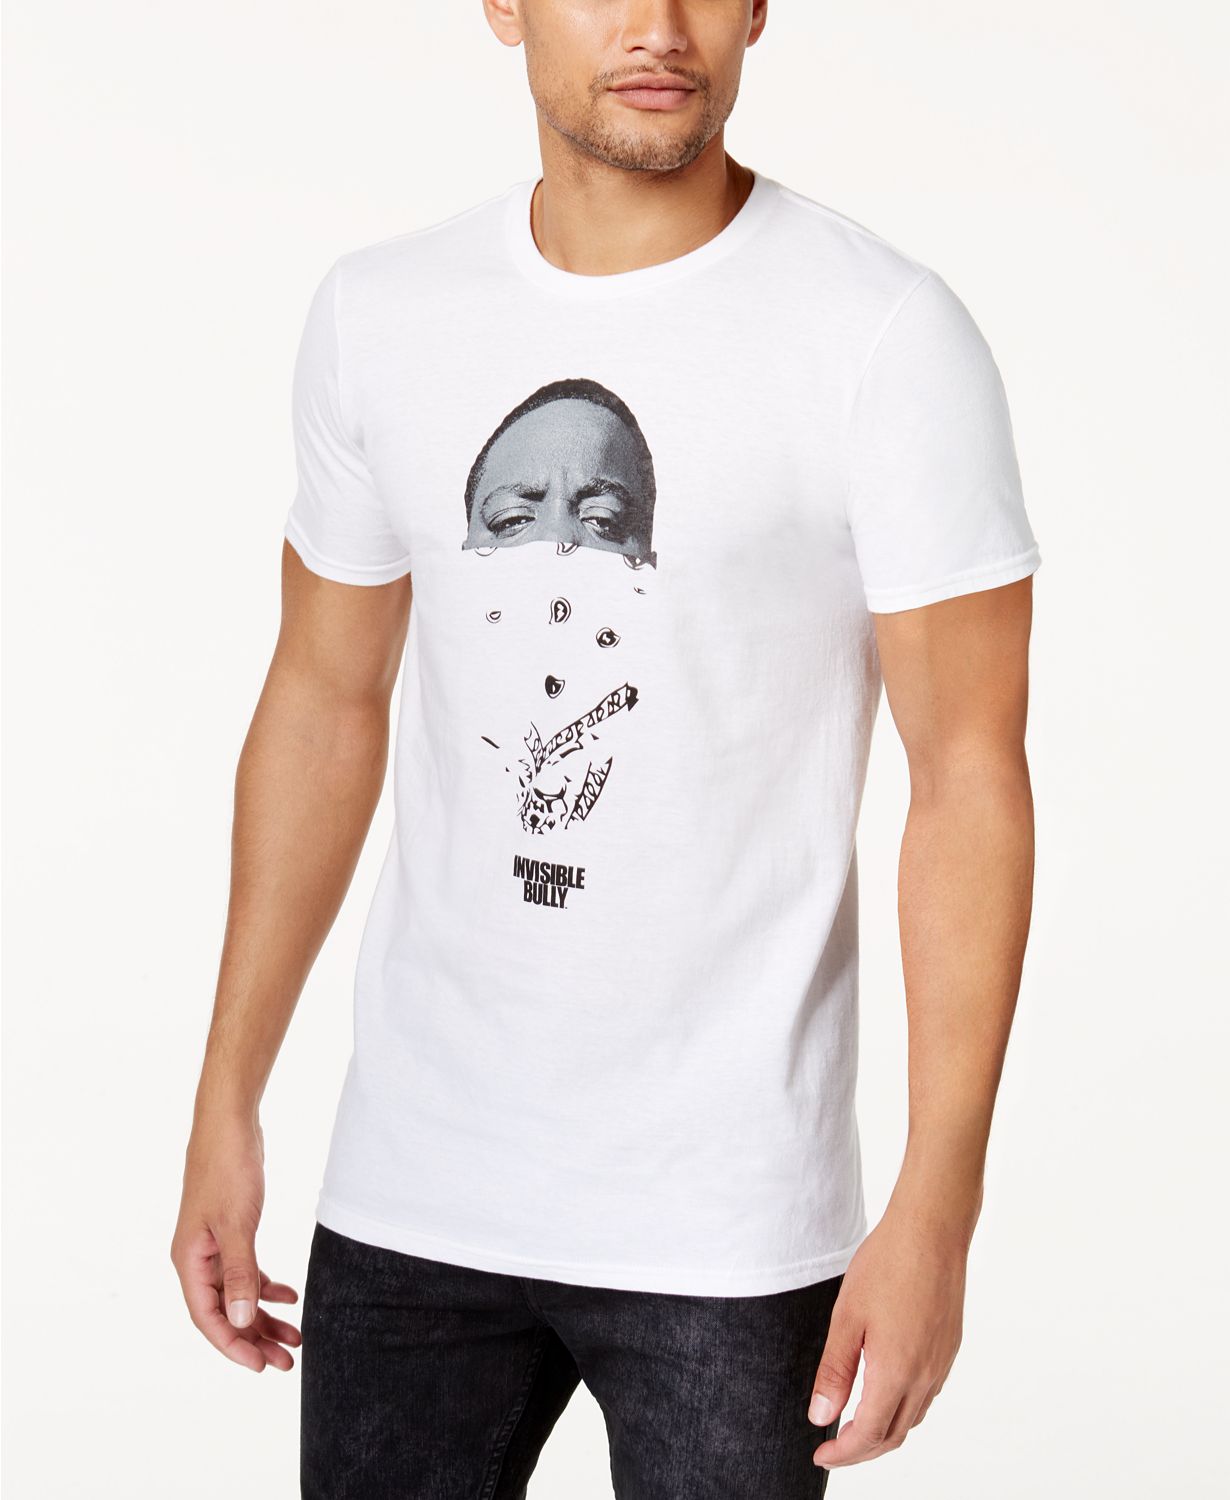 Bad Boy Graphic Print T Shirt / White